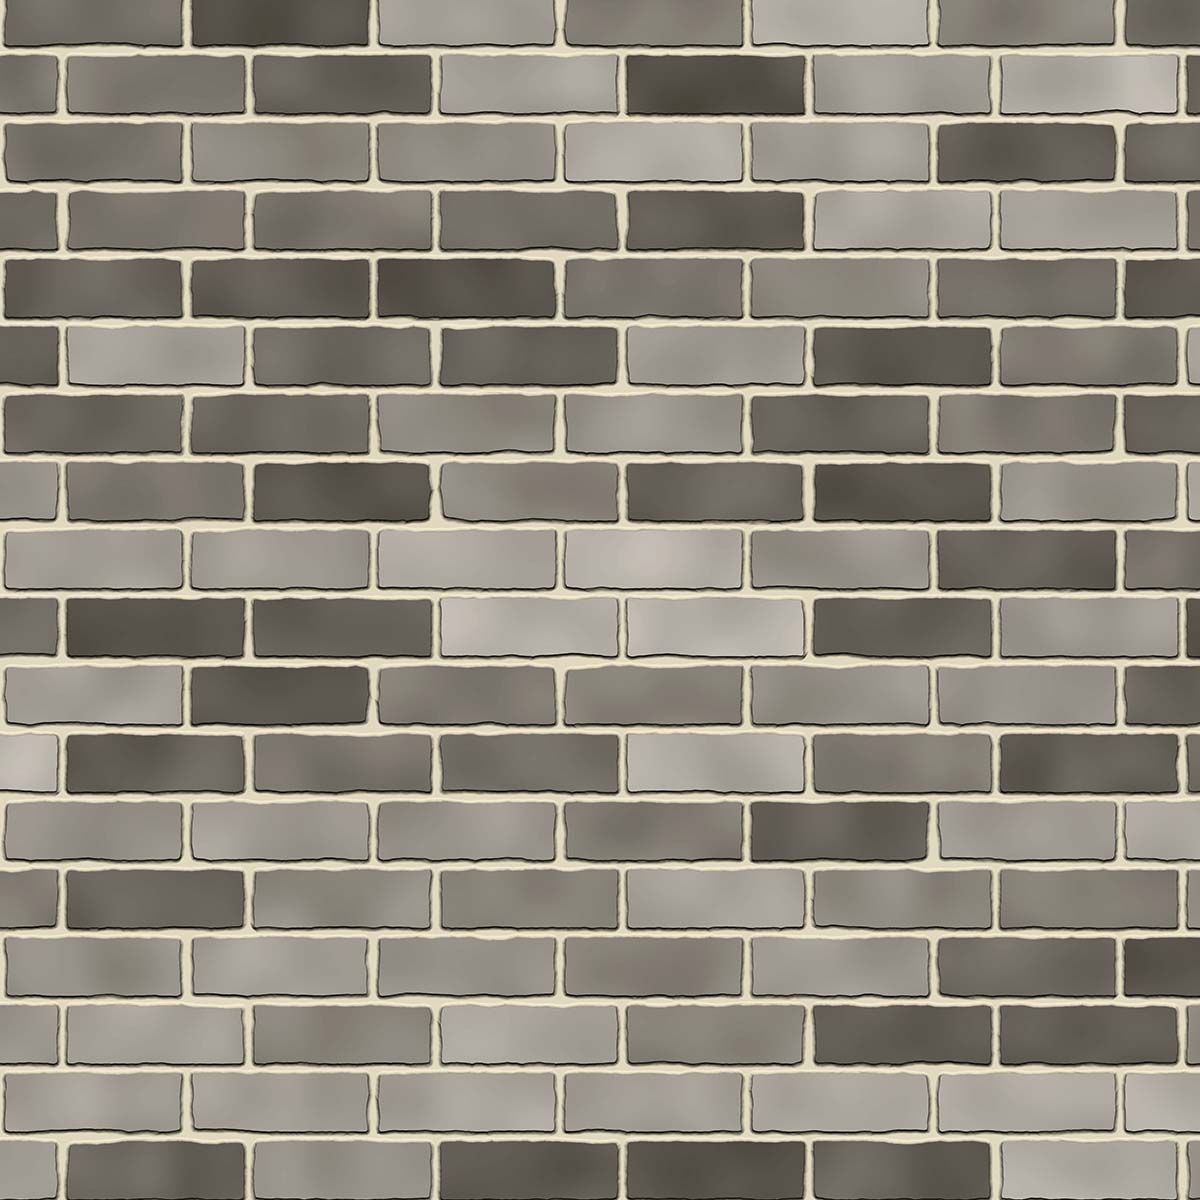 A wall of gray bricks